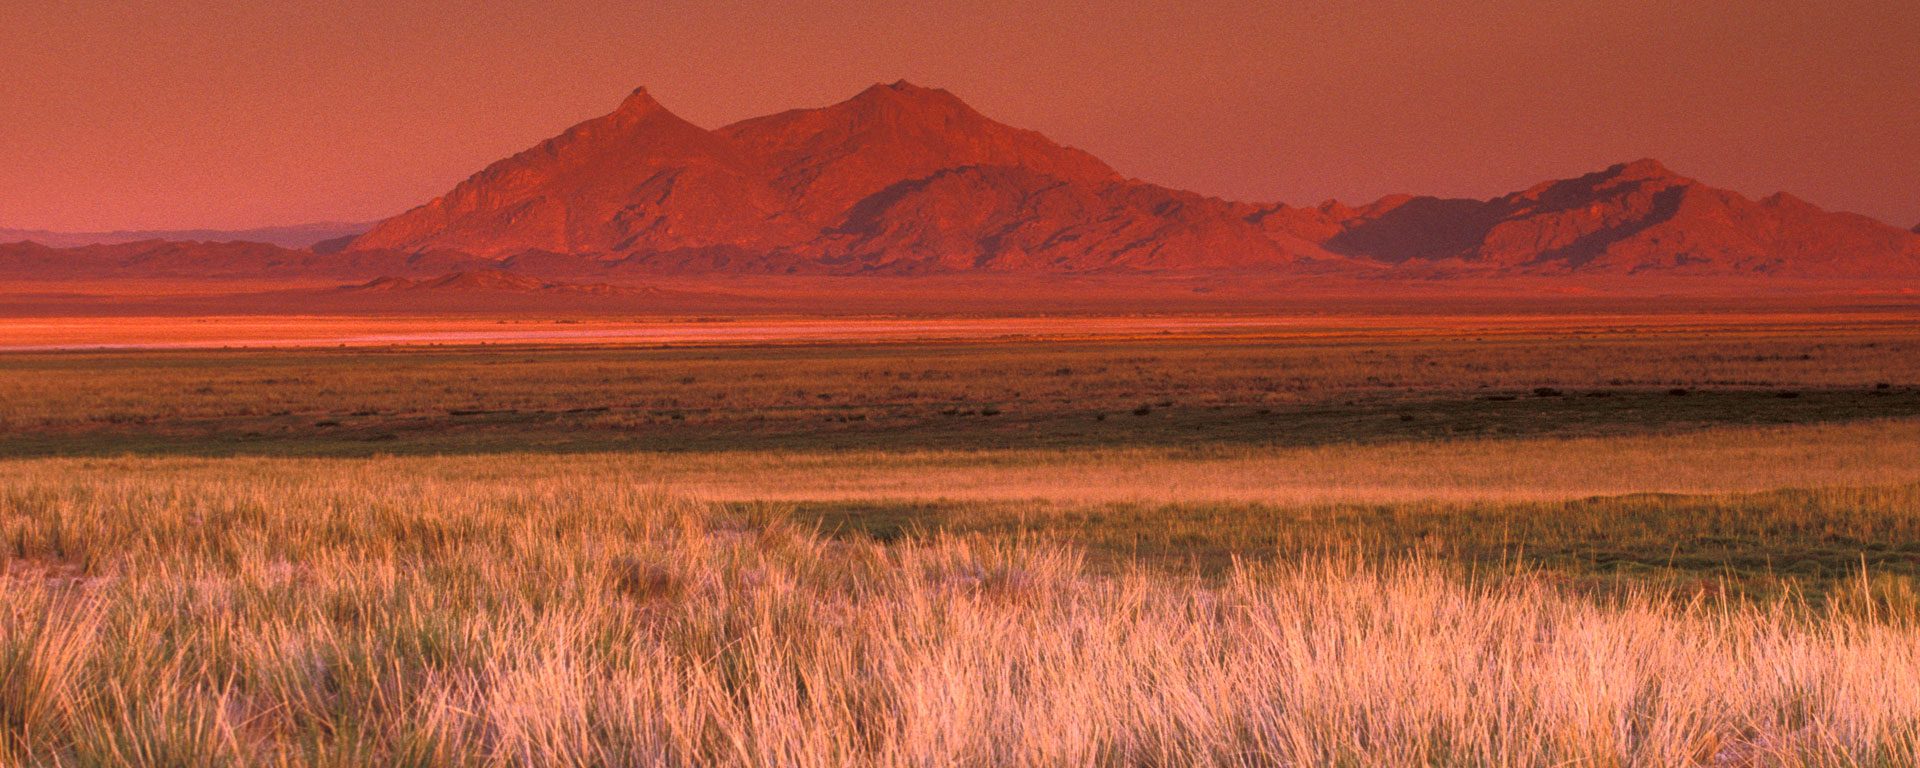 Mountain landscape and grass in the Gobi Desert, Mongolia